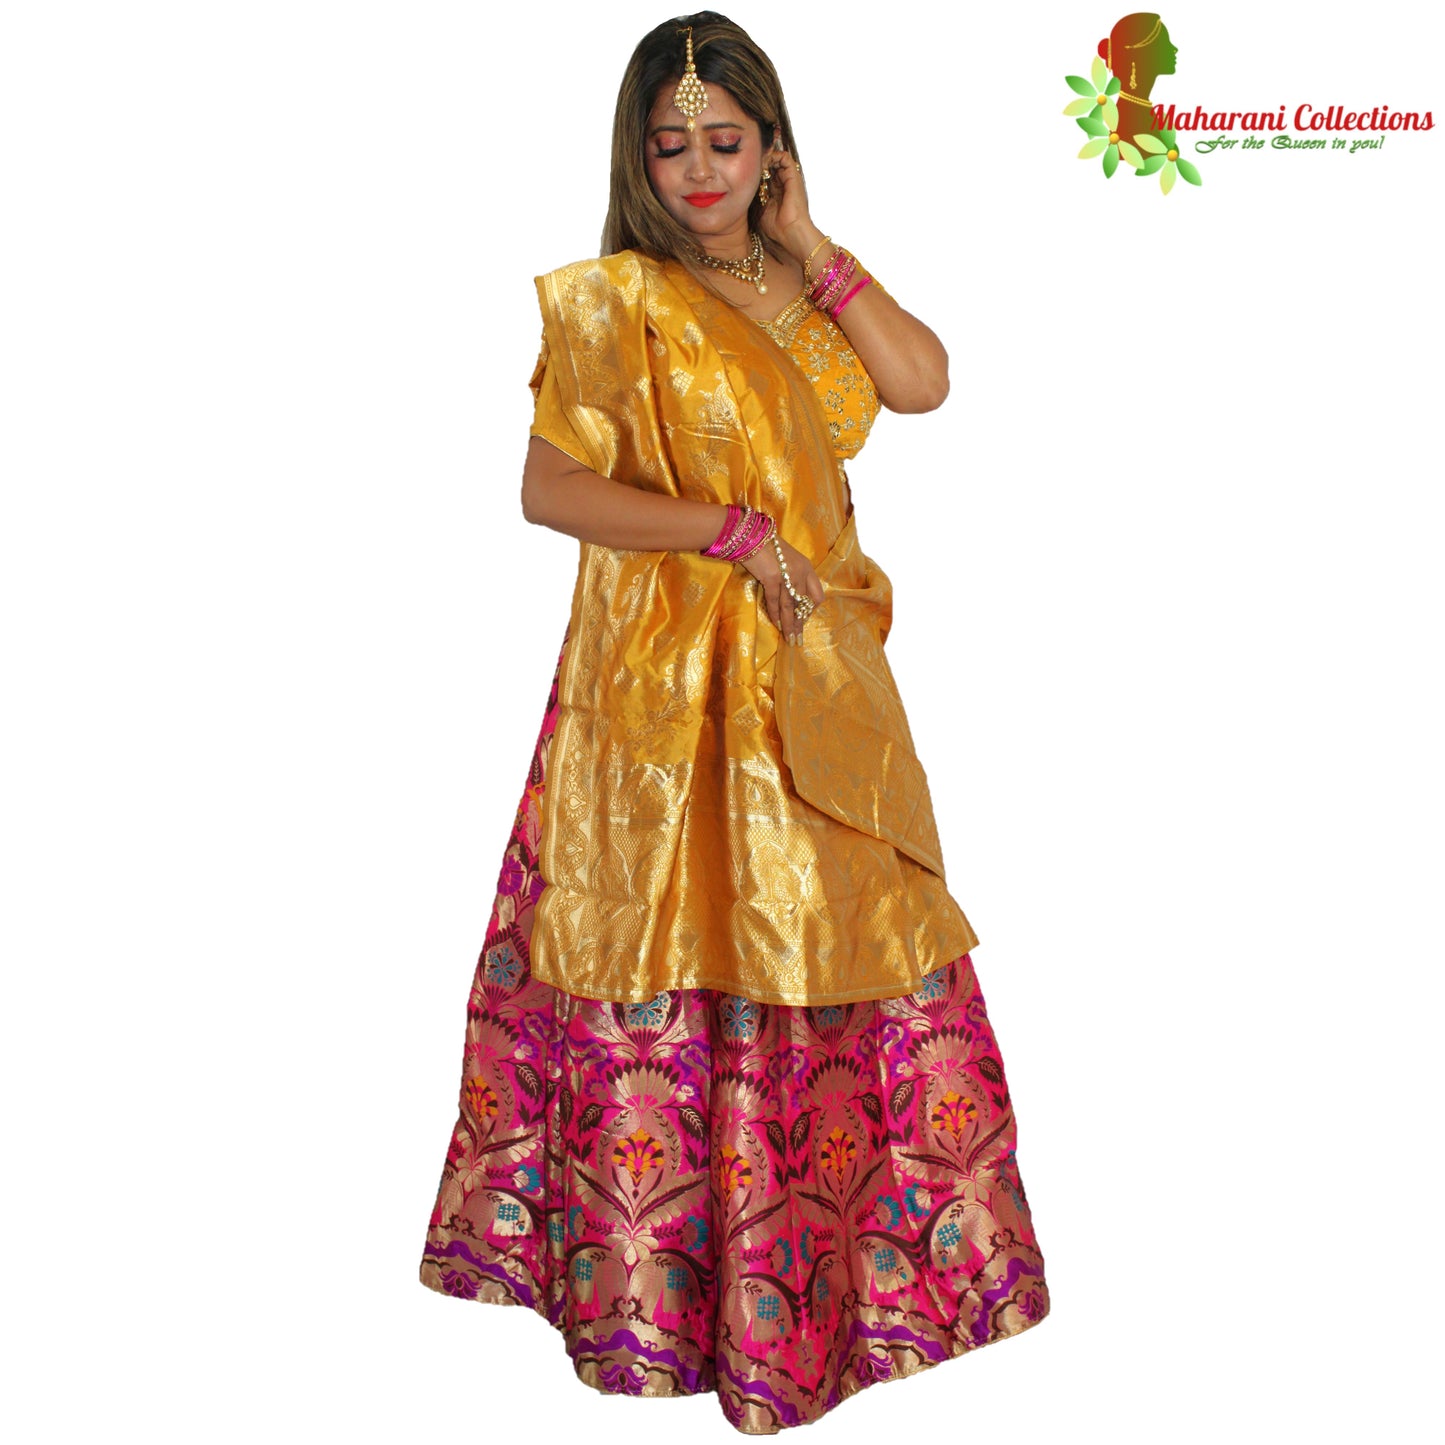 Maharani's Designer Pure Banarasi Silk Lehenga - Yellow, Purple and Pink (M/L)